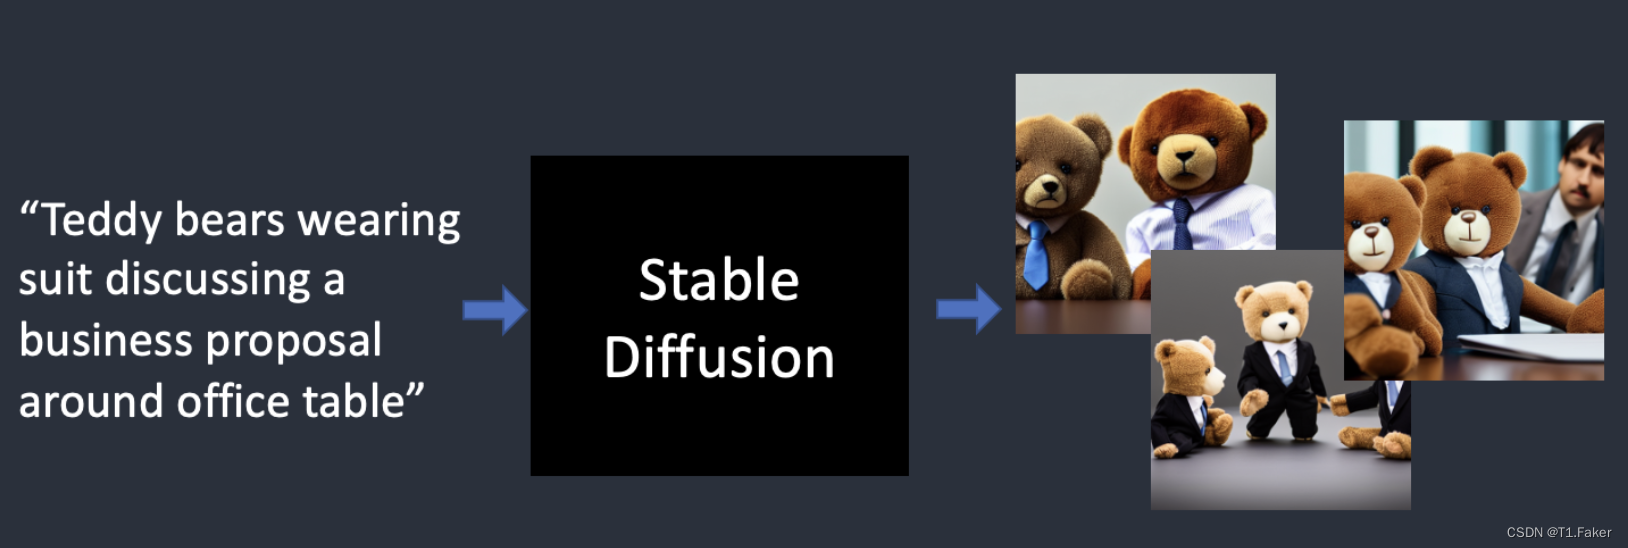 Stable Diffusion模型概述